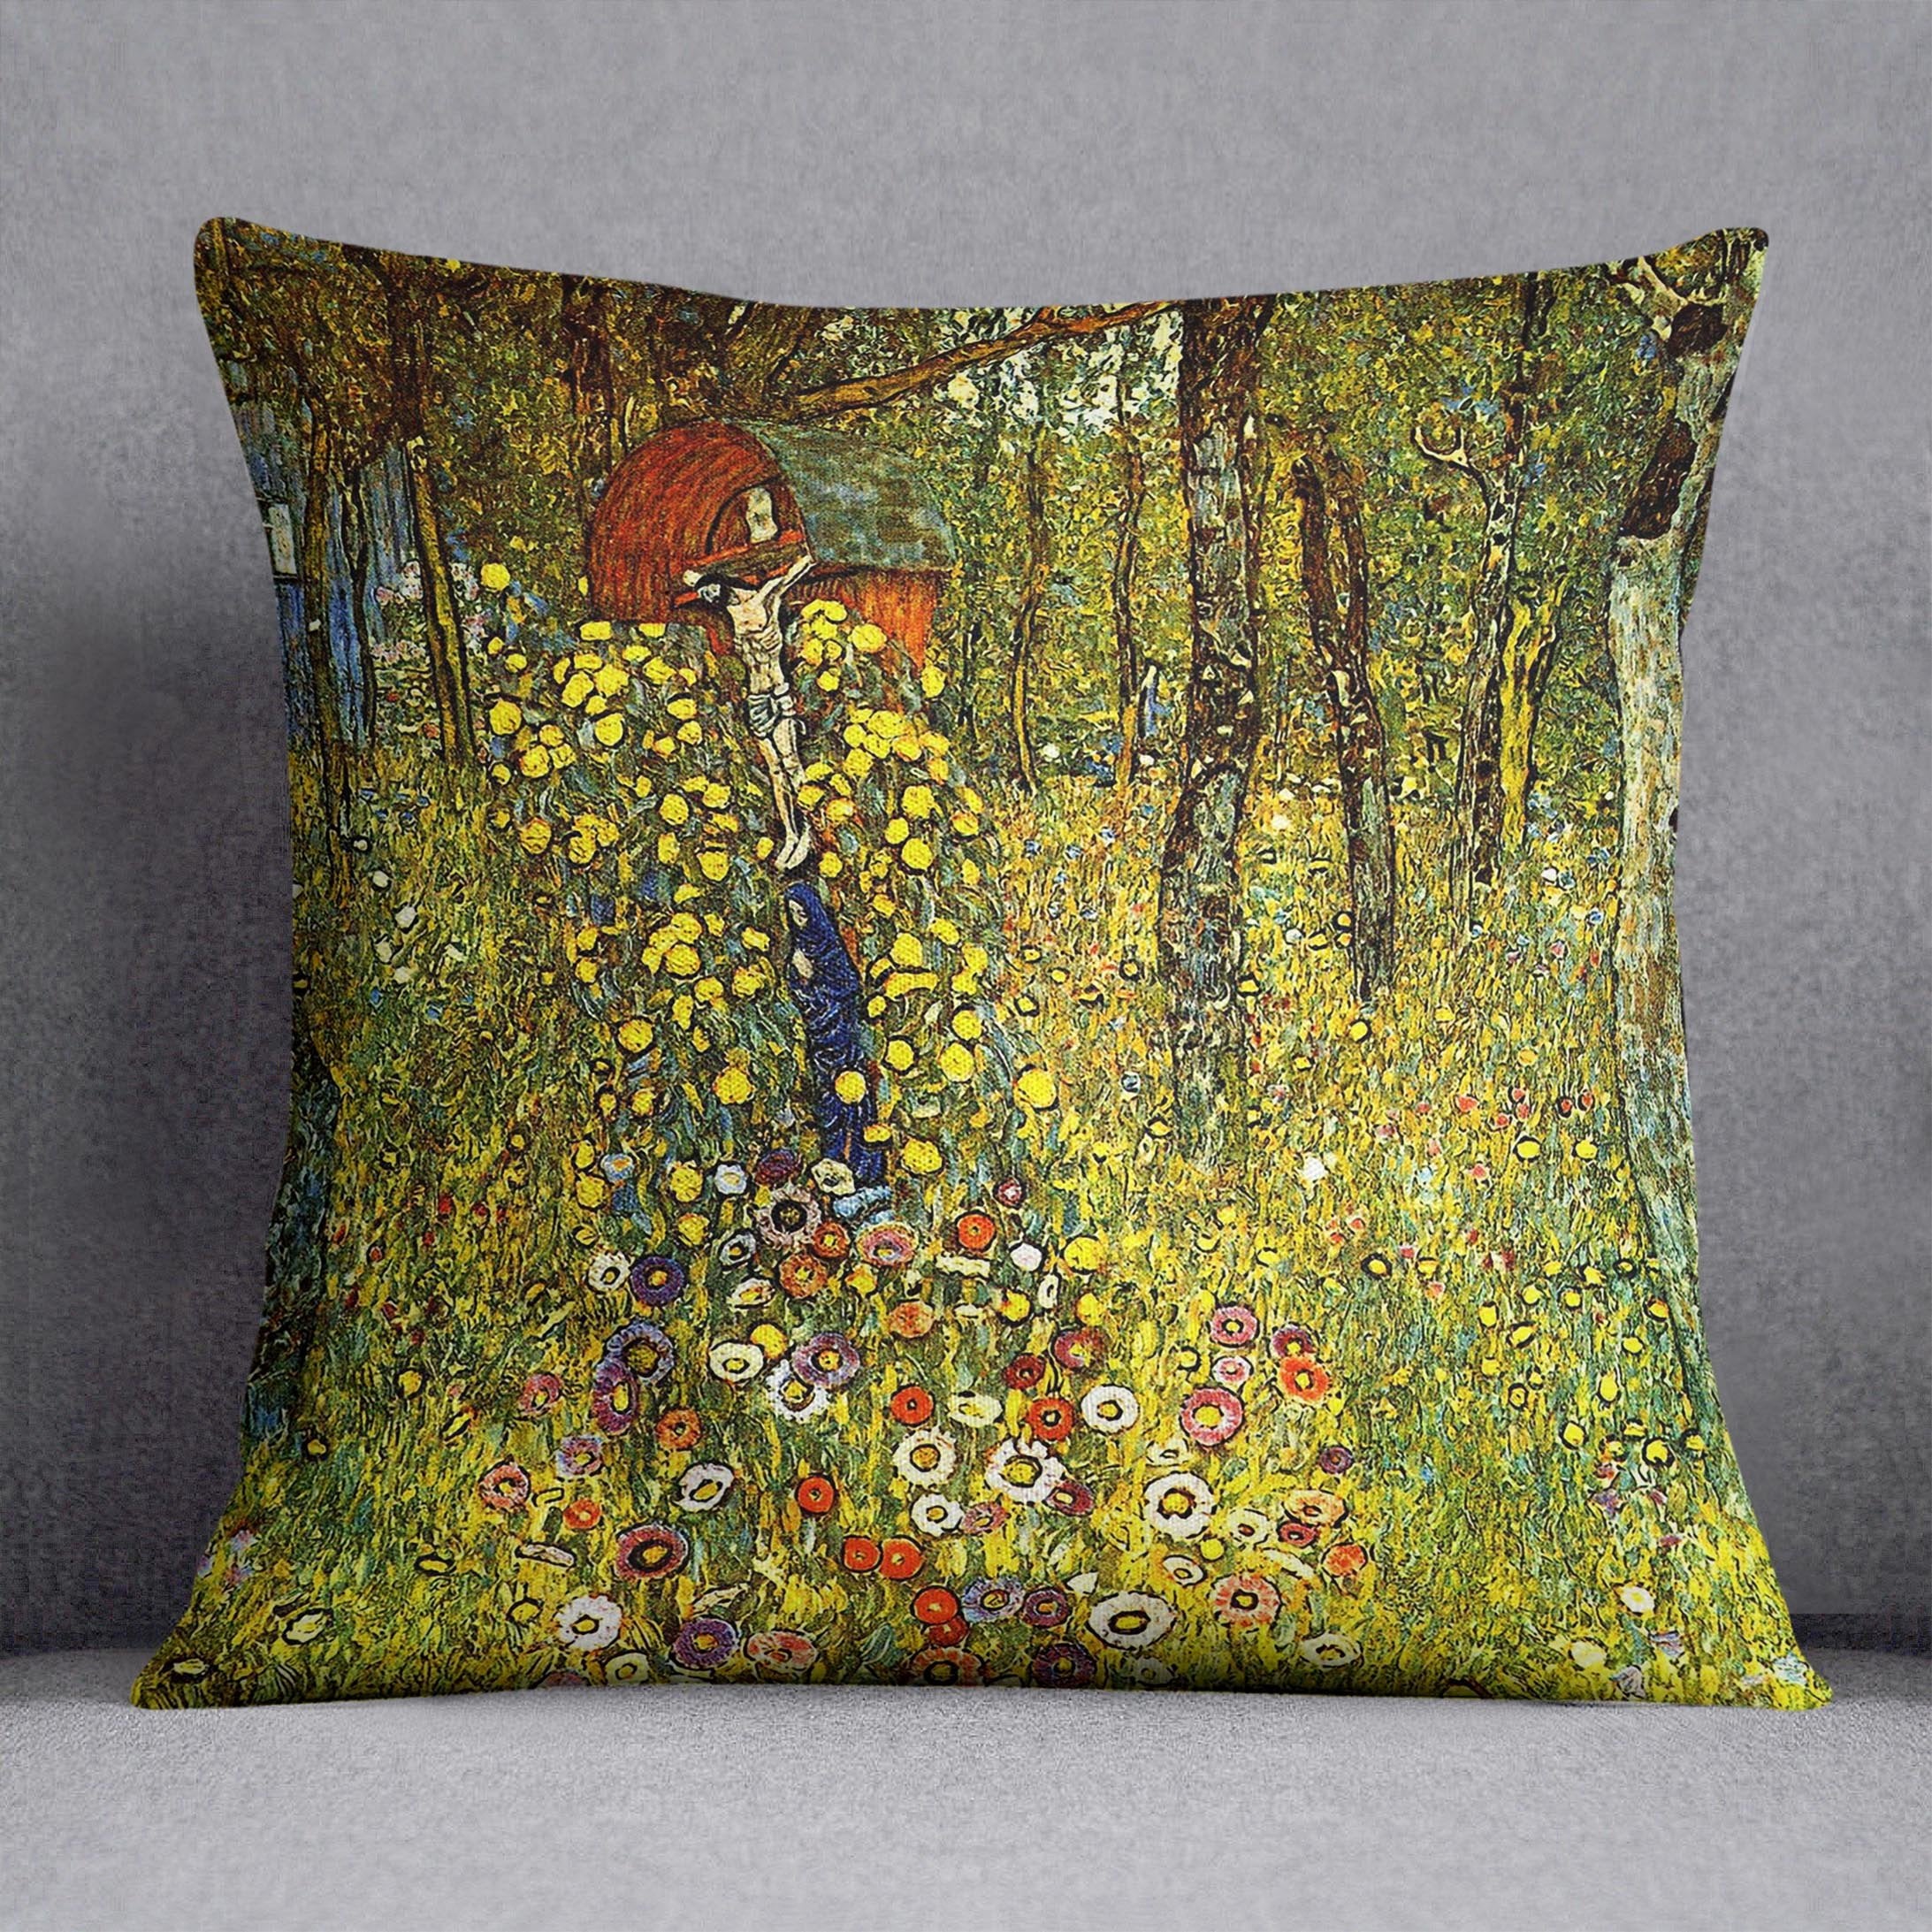 Garden with crucifix by Klimt Throw Pillow